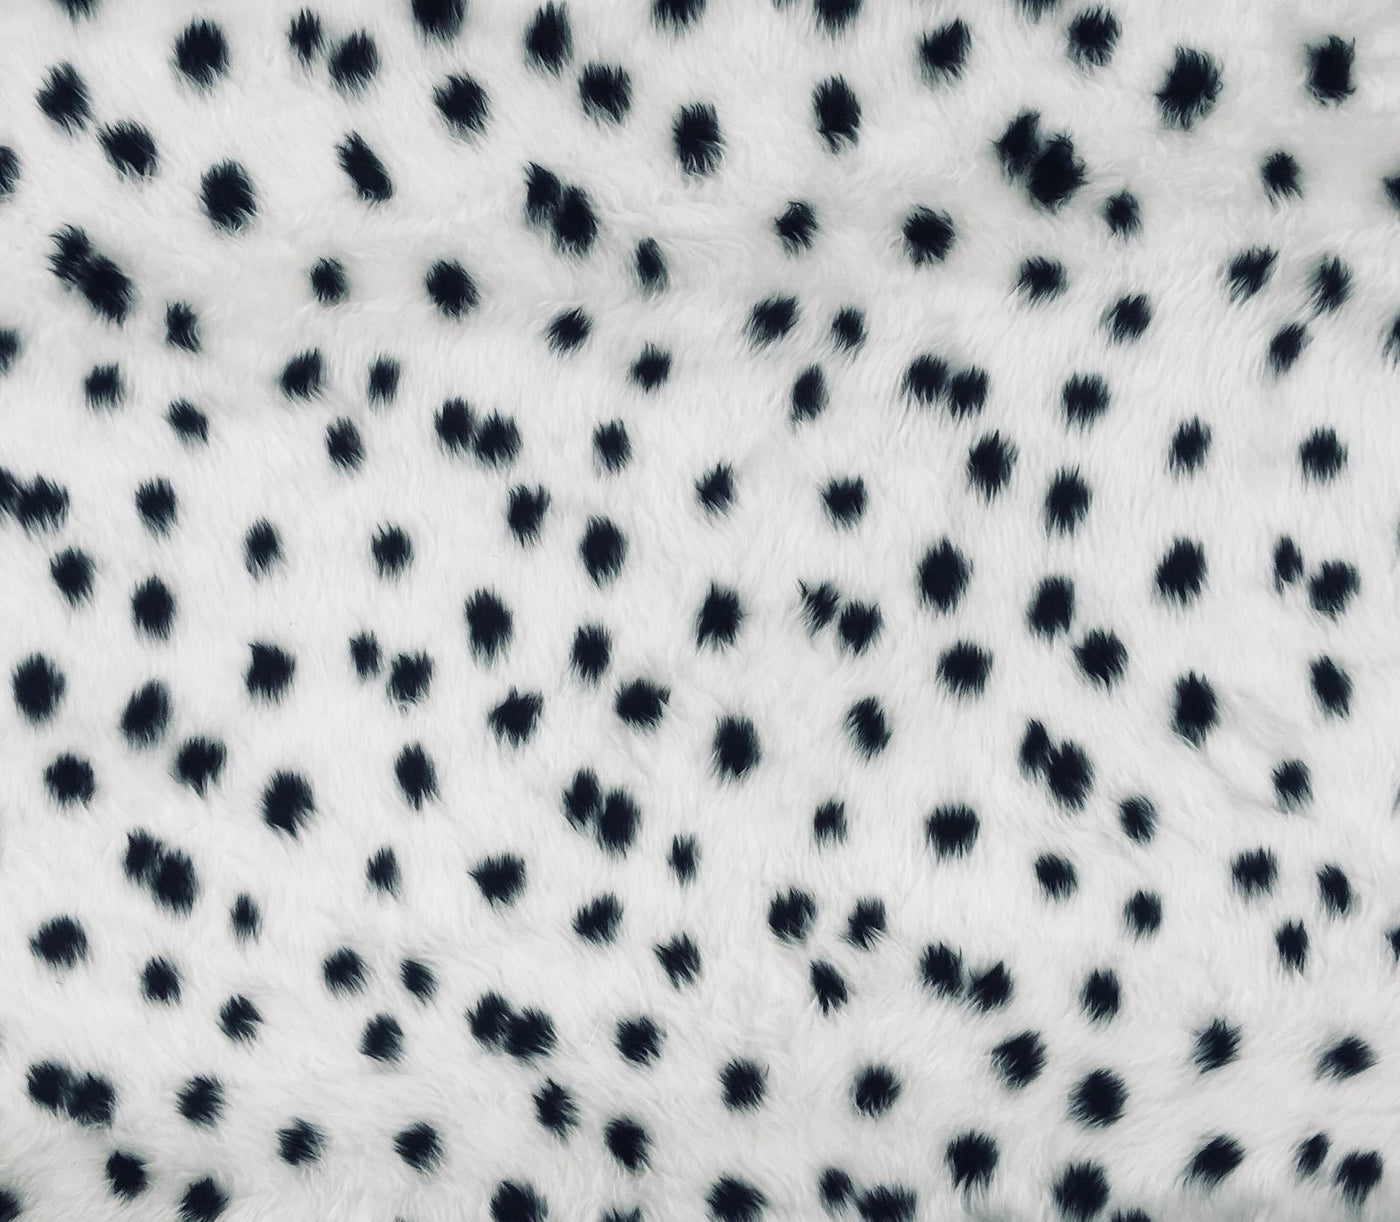 Dalmatian Print Faux Fur Fabric 150cm wide (60")